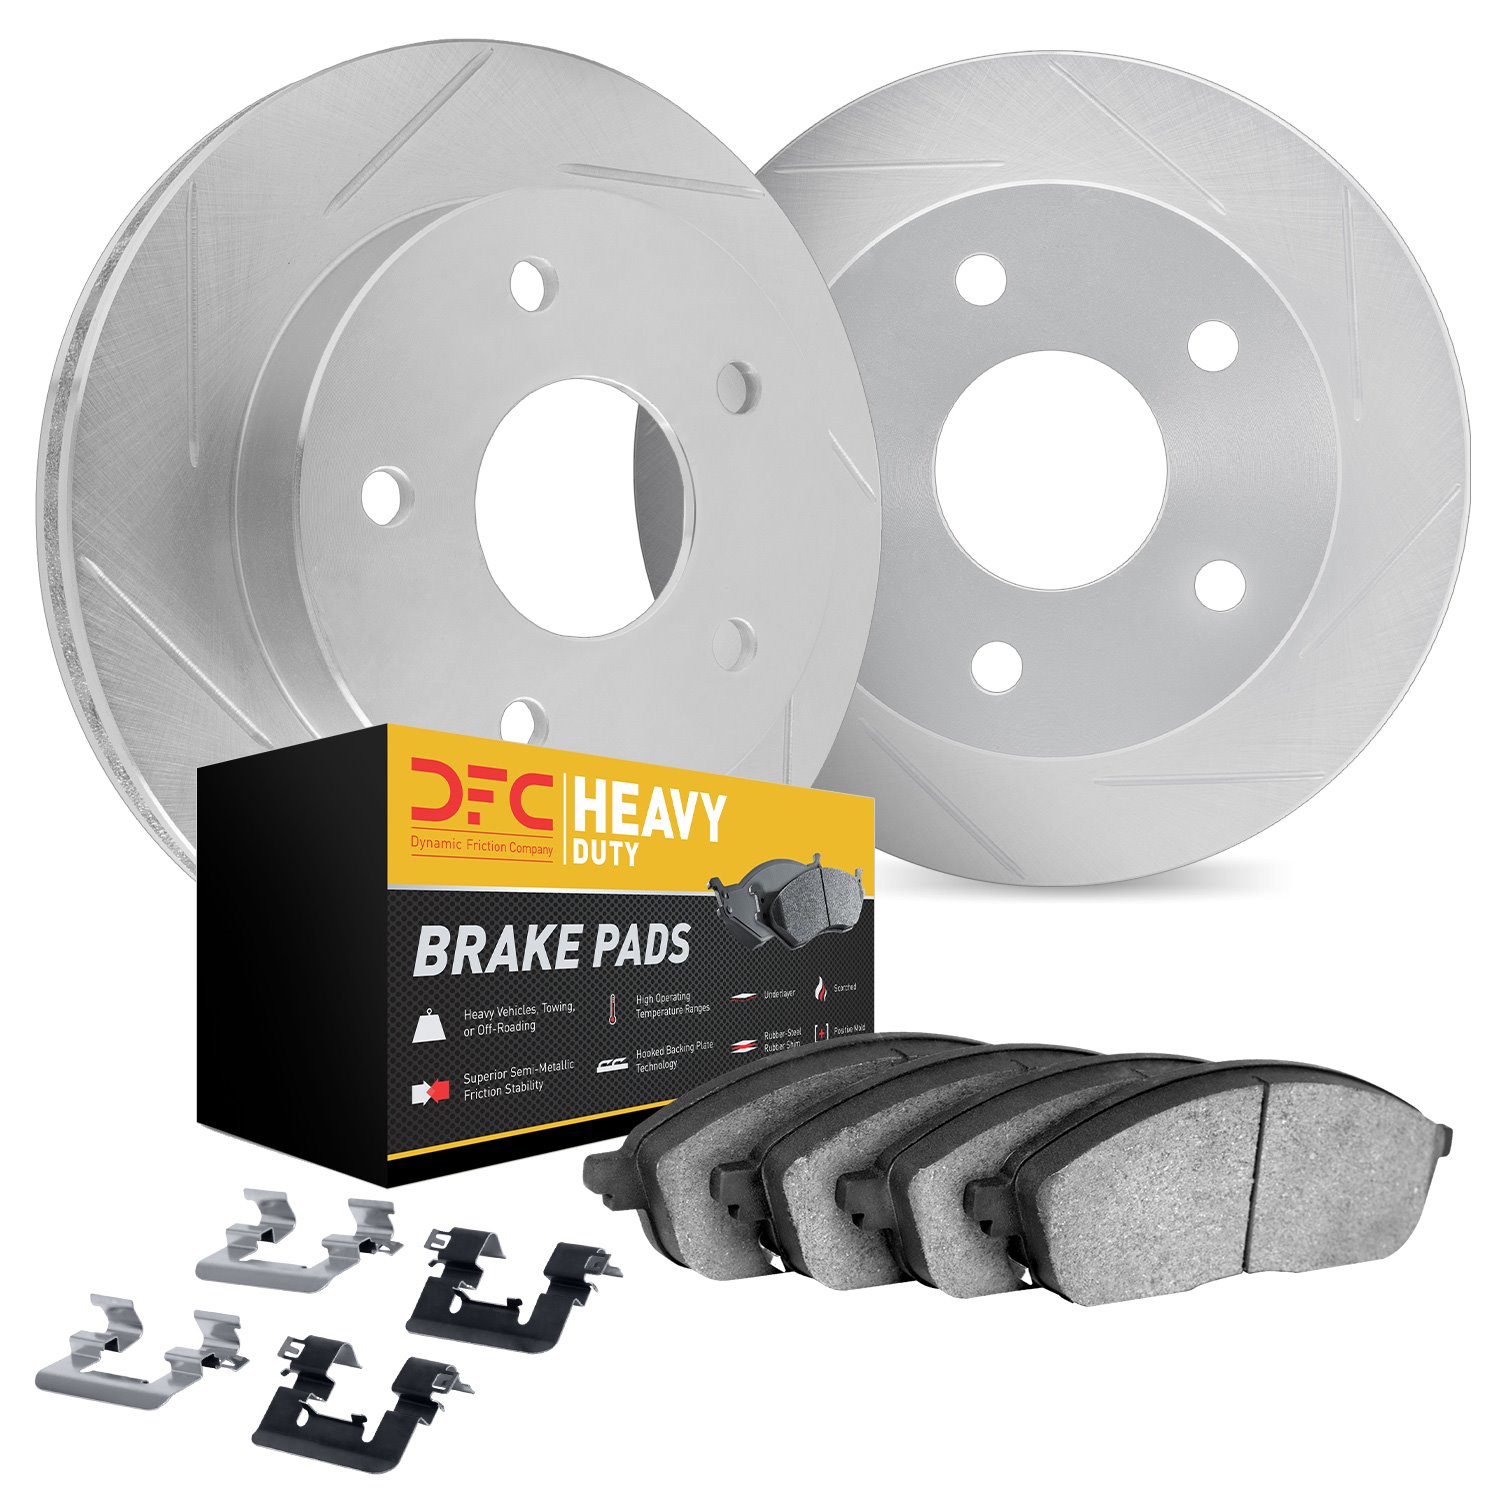 5212-54002 Slotted Brake Rotors w/Heavy-Duty Brake Pads Kits & Hardware [Silver], 2009-2010 Ford/Lincoln/Mercury/Mazda, Position